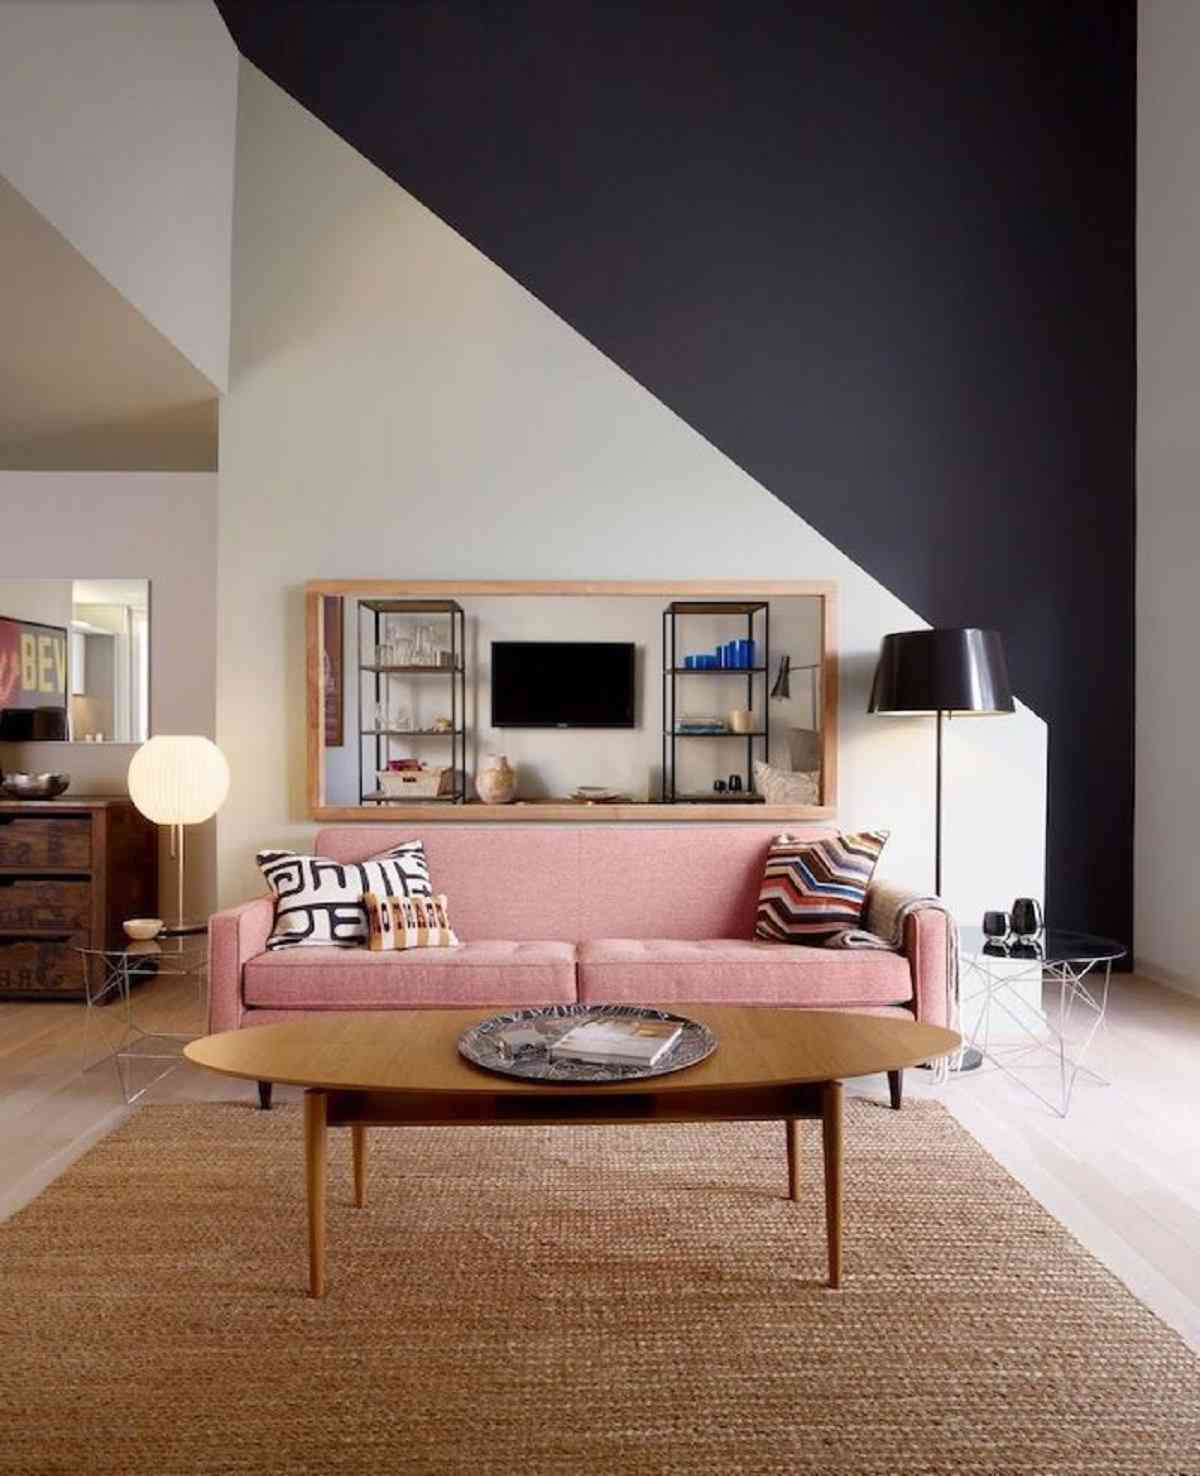 Descubre la tendencia decorativa: paredes bicolor 3